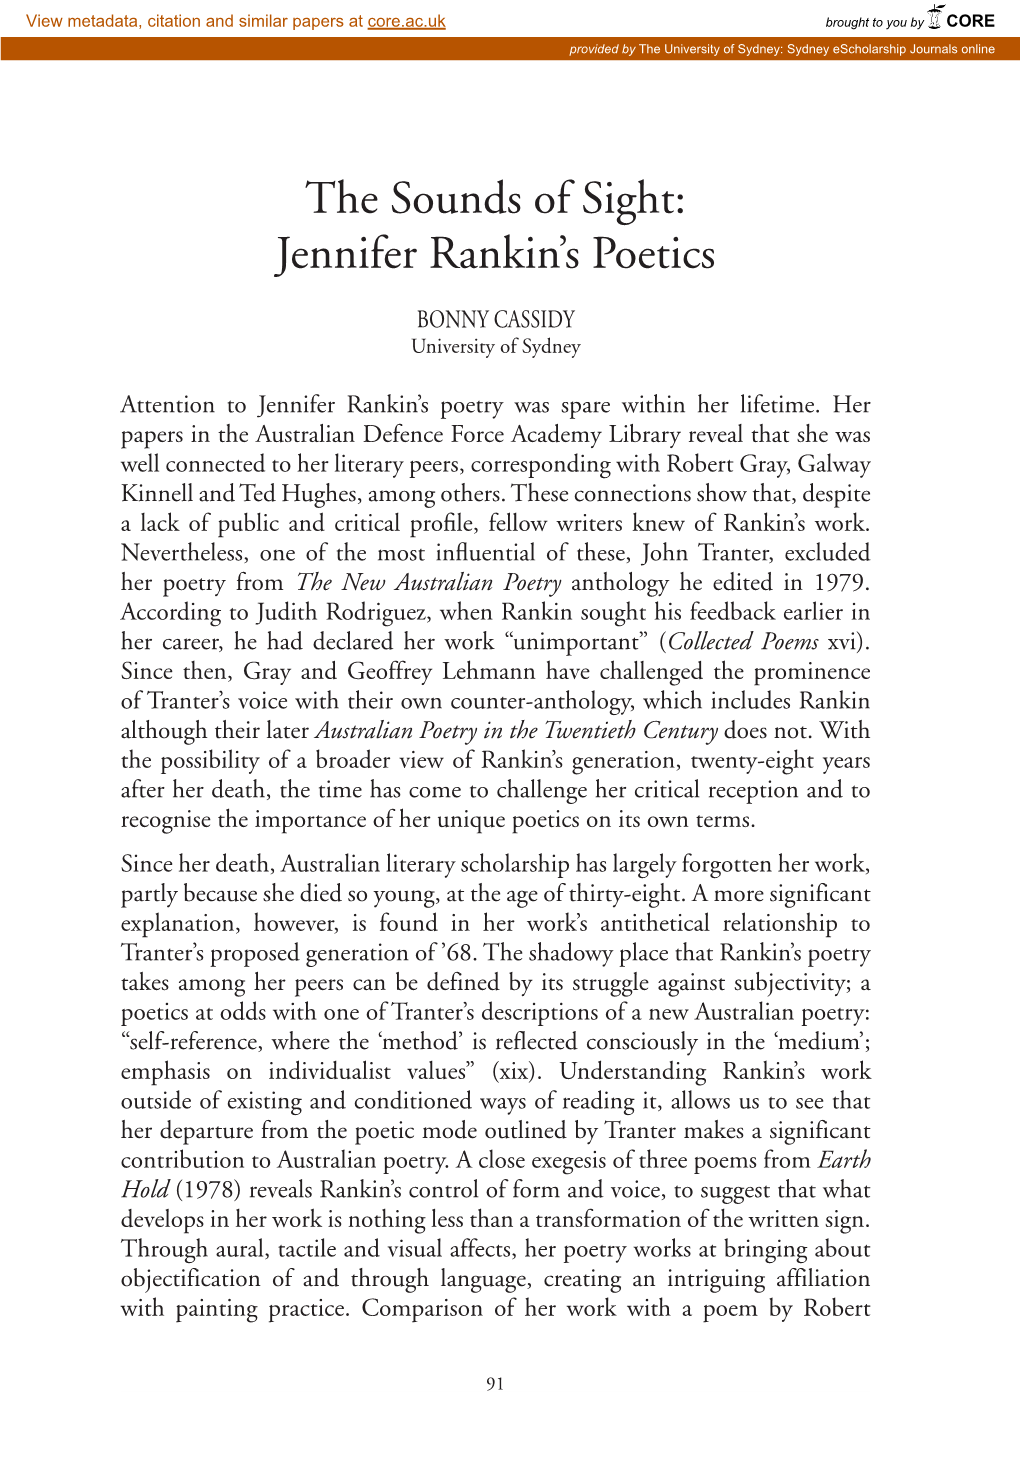 The Sounds of Sight: Jennifer Rankin's Poetics